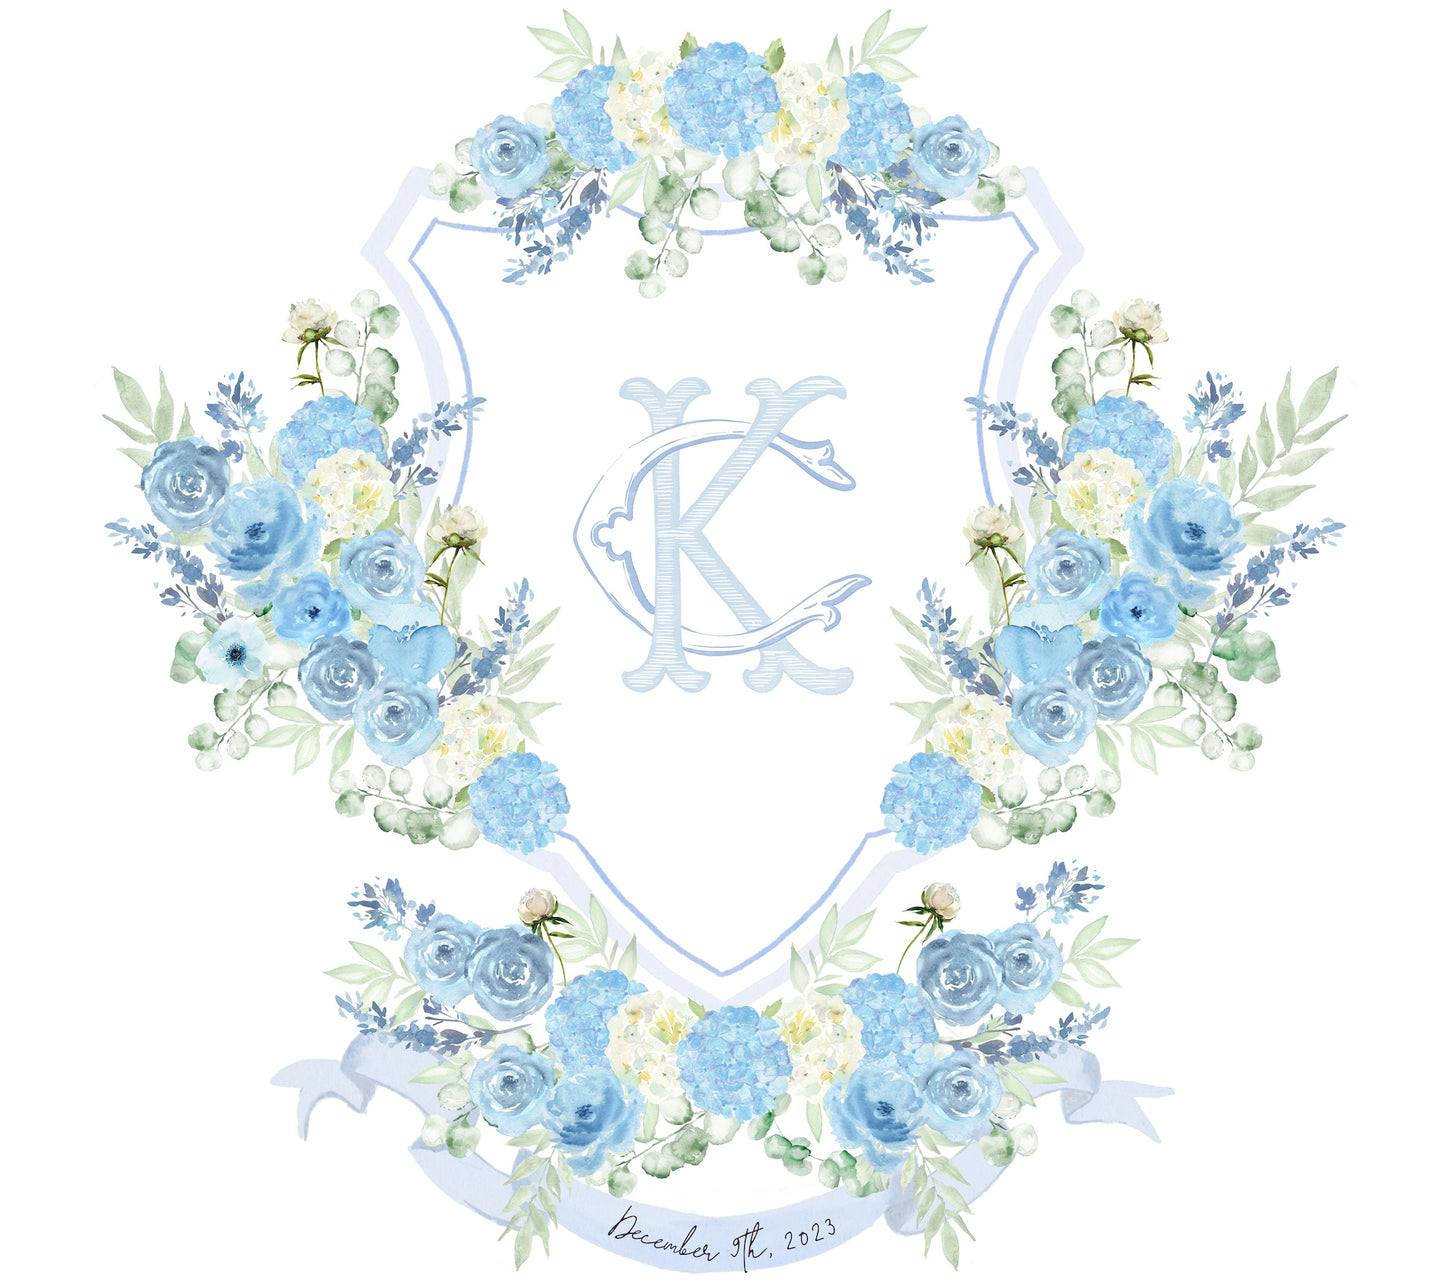 Dusty blue Roses and Peonies wedding crest, monogram crest, watercolor crest, light blue floral crest The Wedding Crest Lab